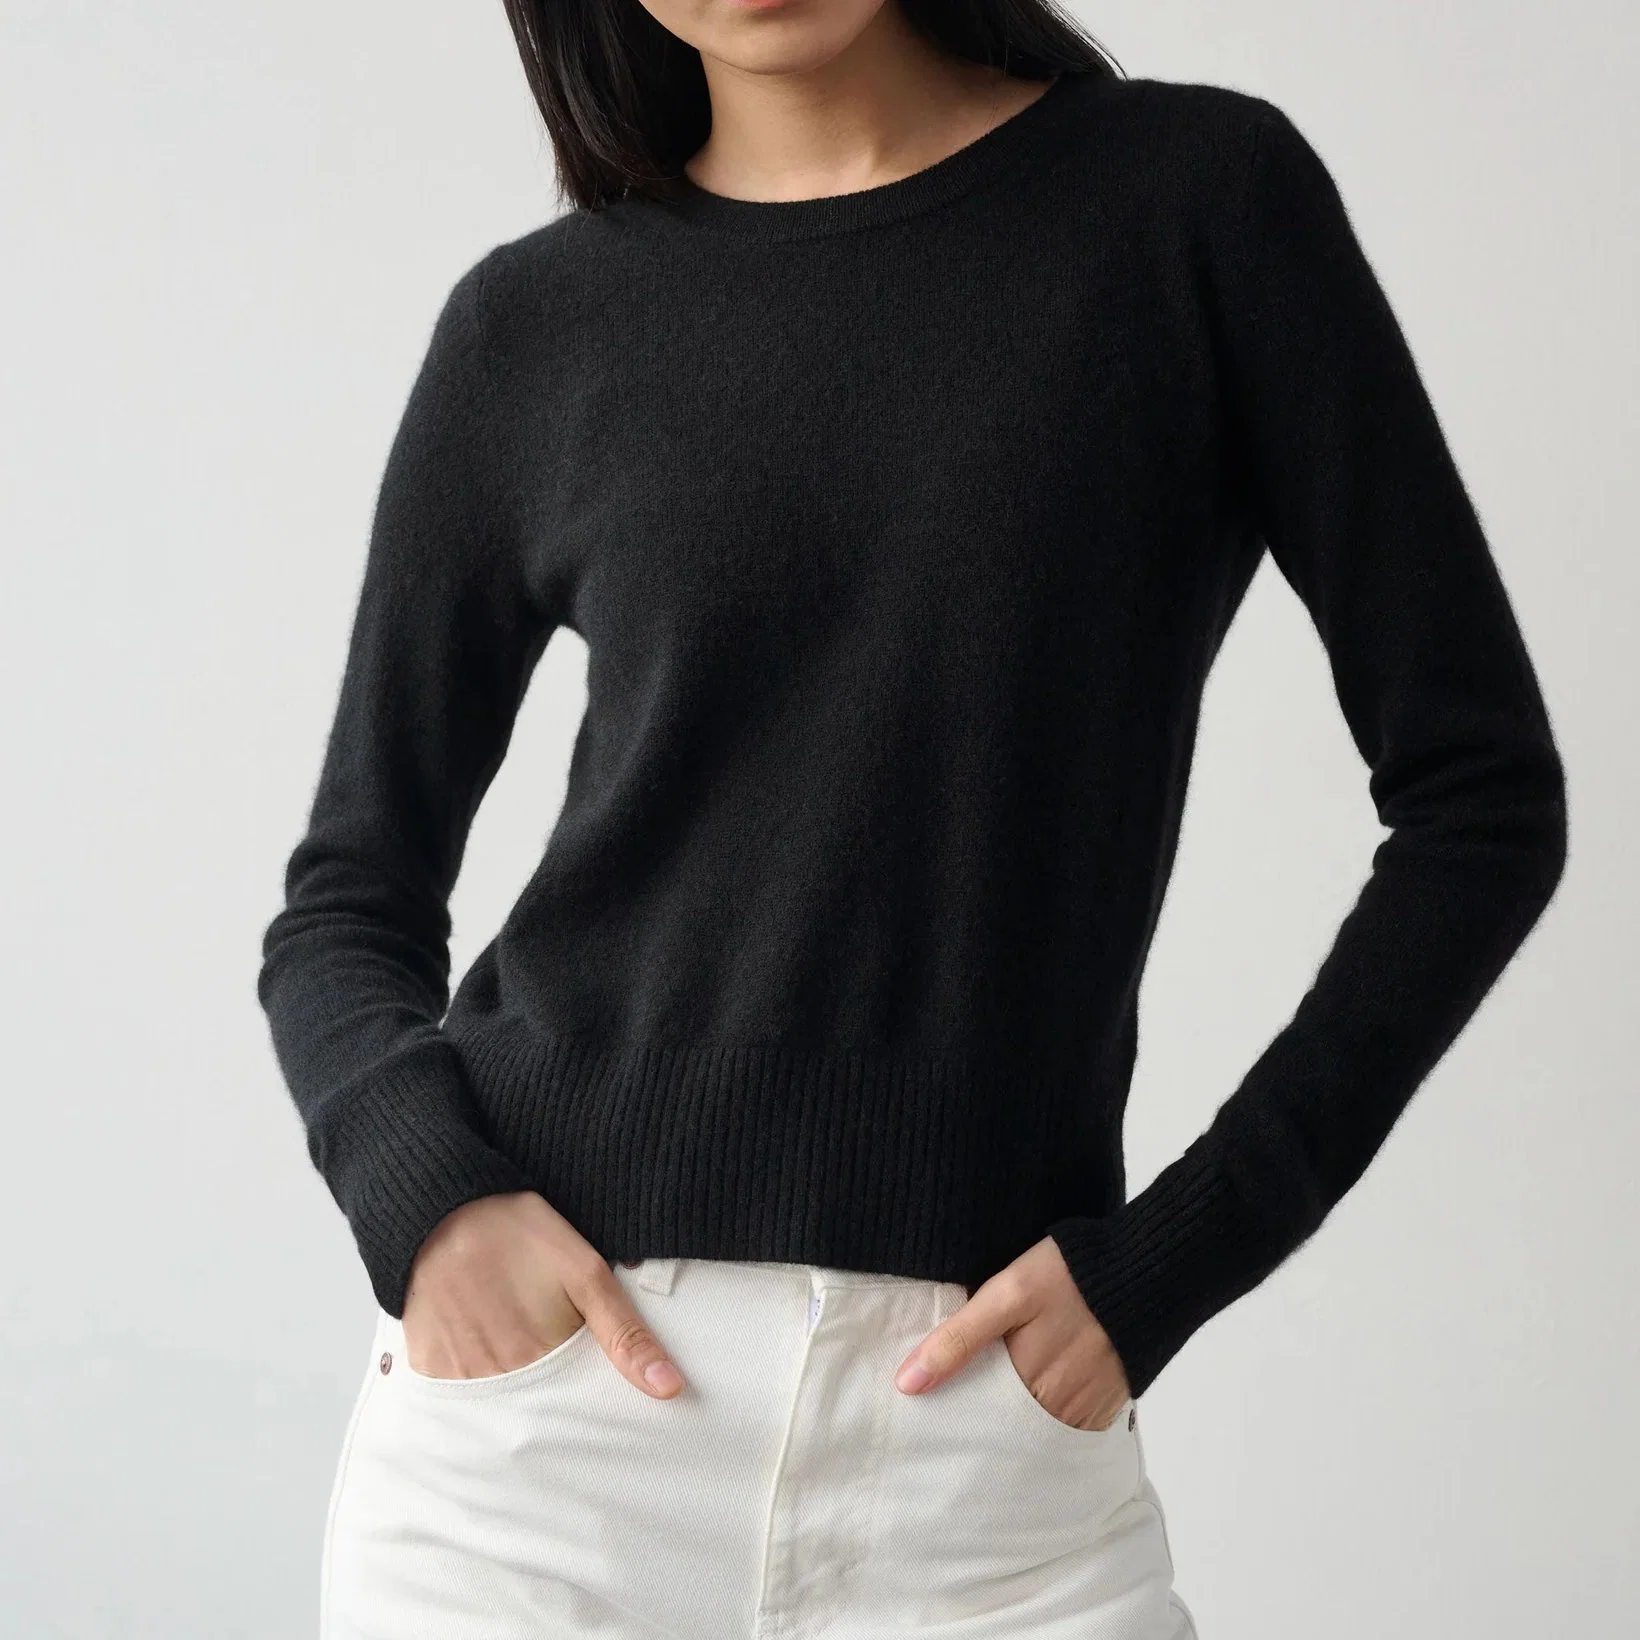 100% Cashmere Crew Neck Classic & Simple Designed Pullover Sweater